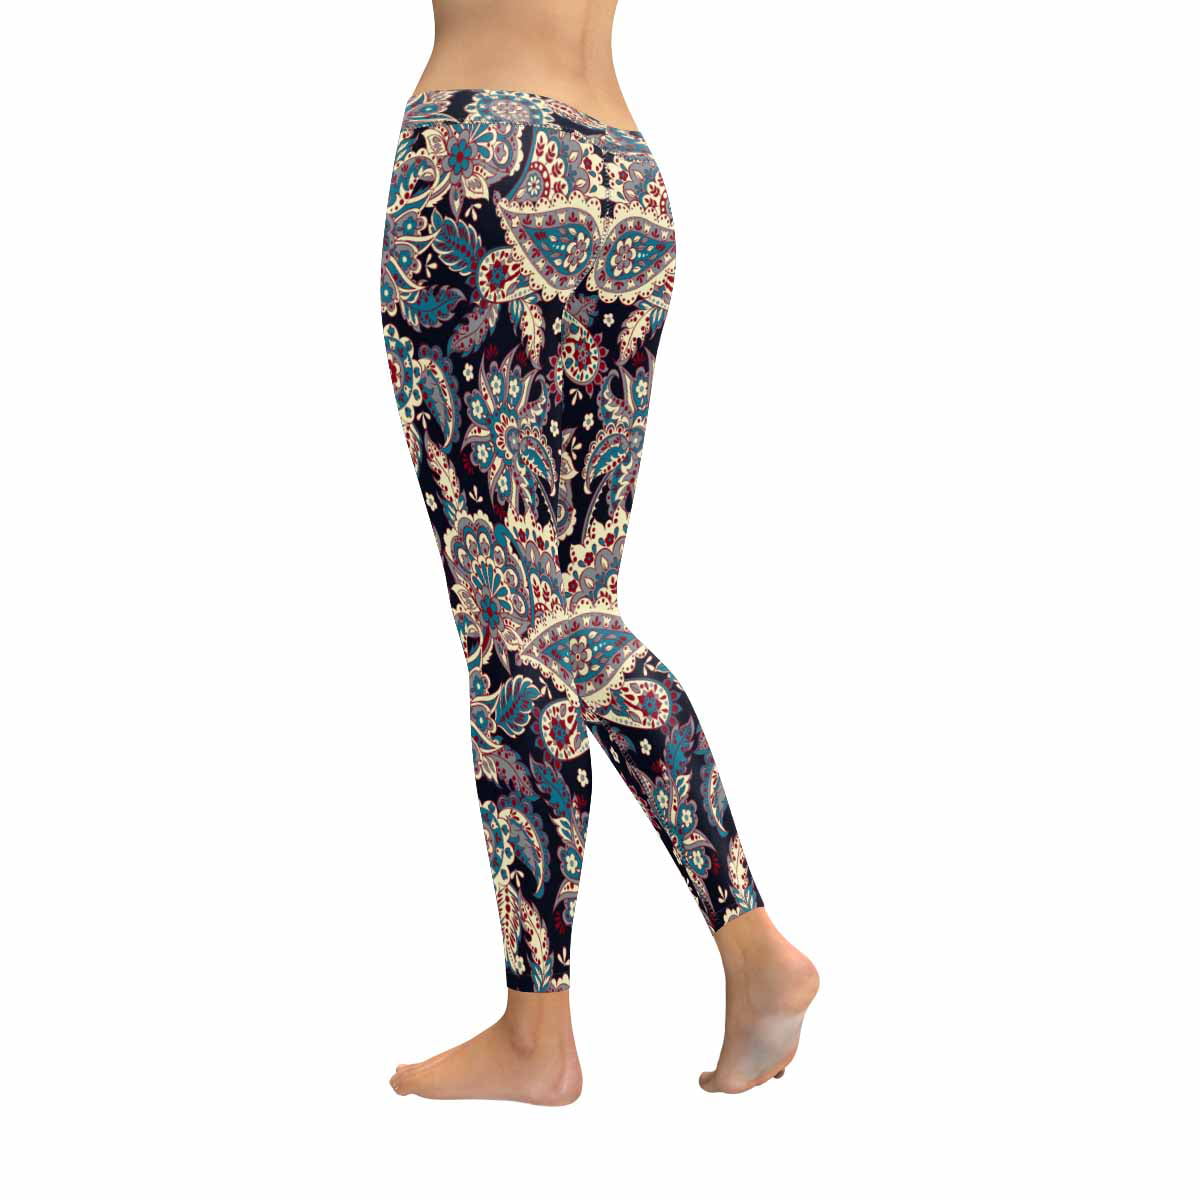 SUNENAT Colorful Paisley Indian Floral Women's Capri Leggings Stretchy  Skinny Yoga Pants M 